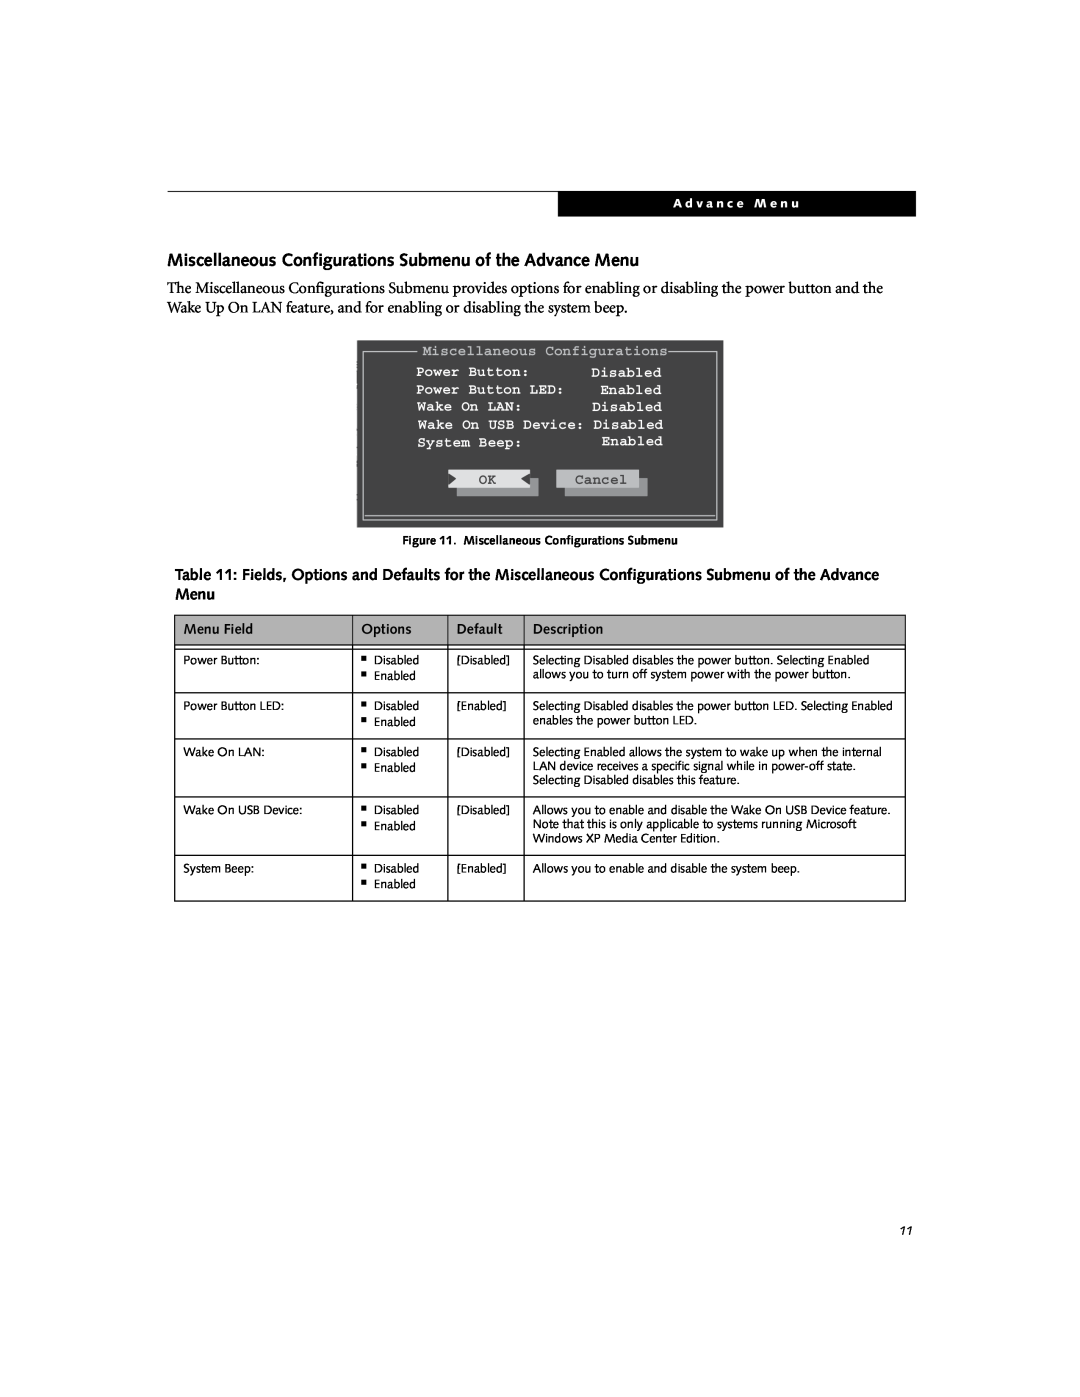 Fujitsu N6220 manual Miscellaneous Configurations Submenu of the Advance Menu, Menu Field, Options, Default, Description 